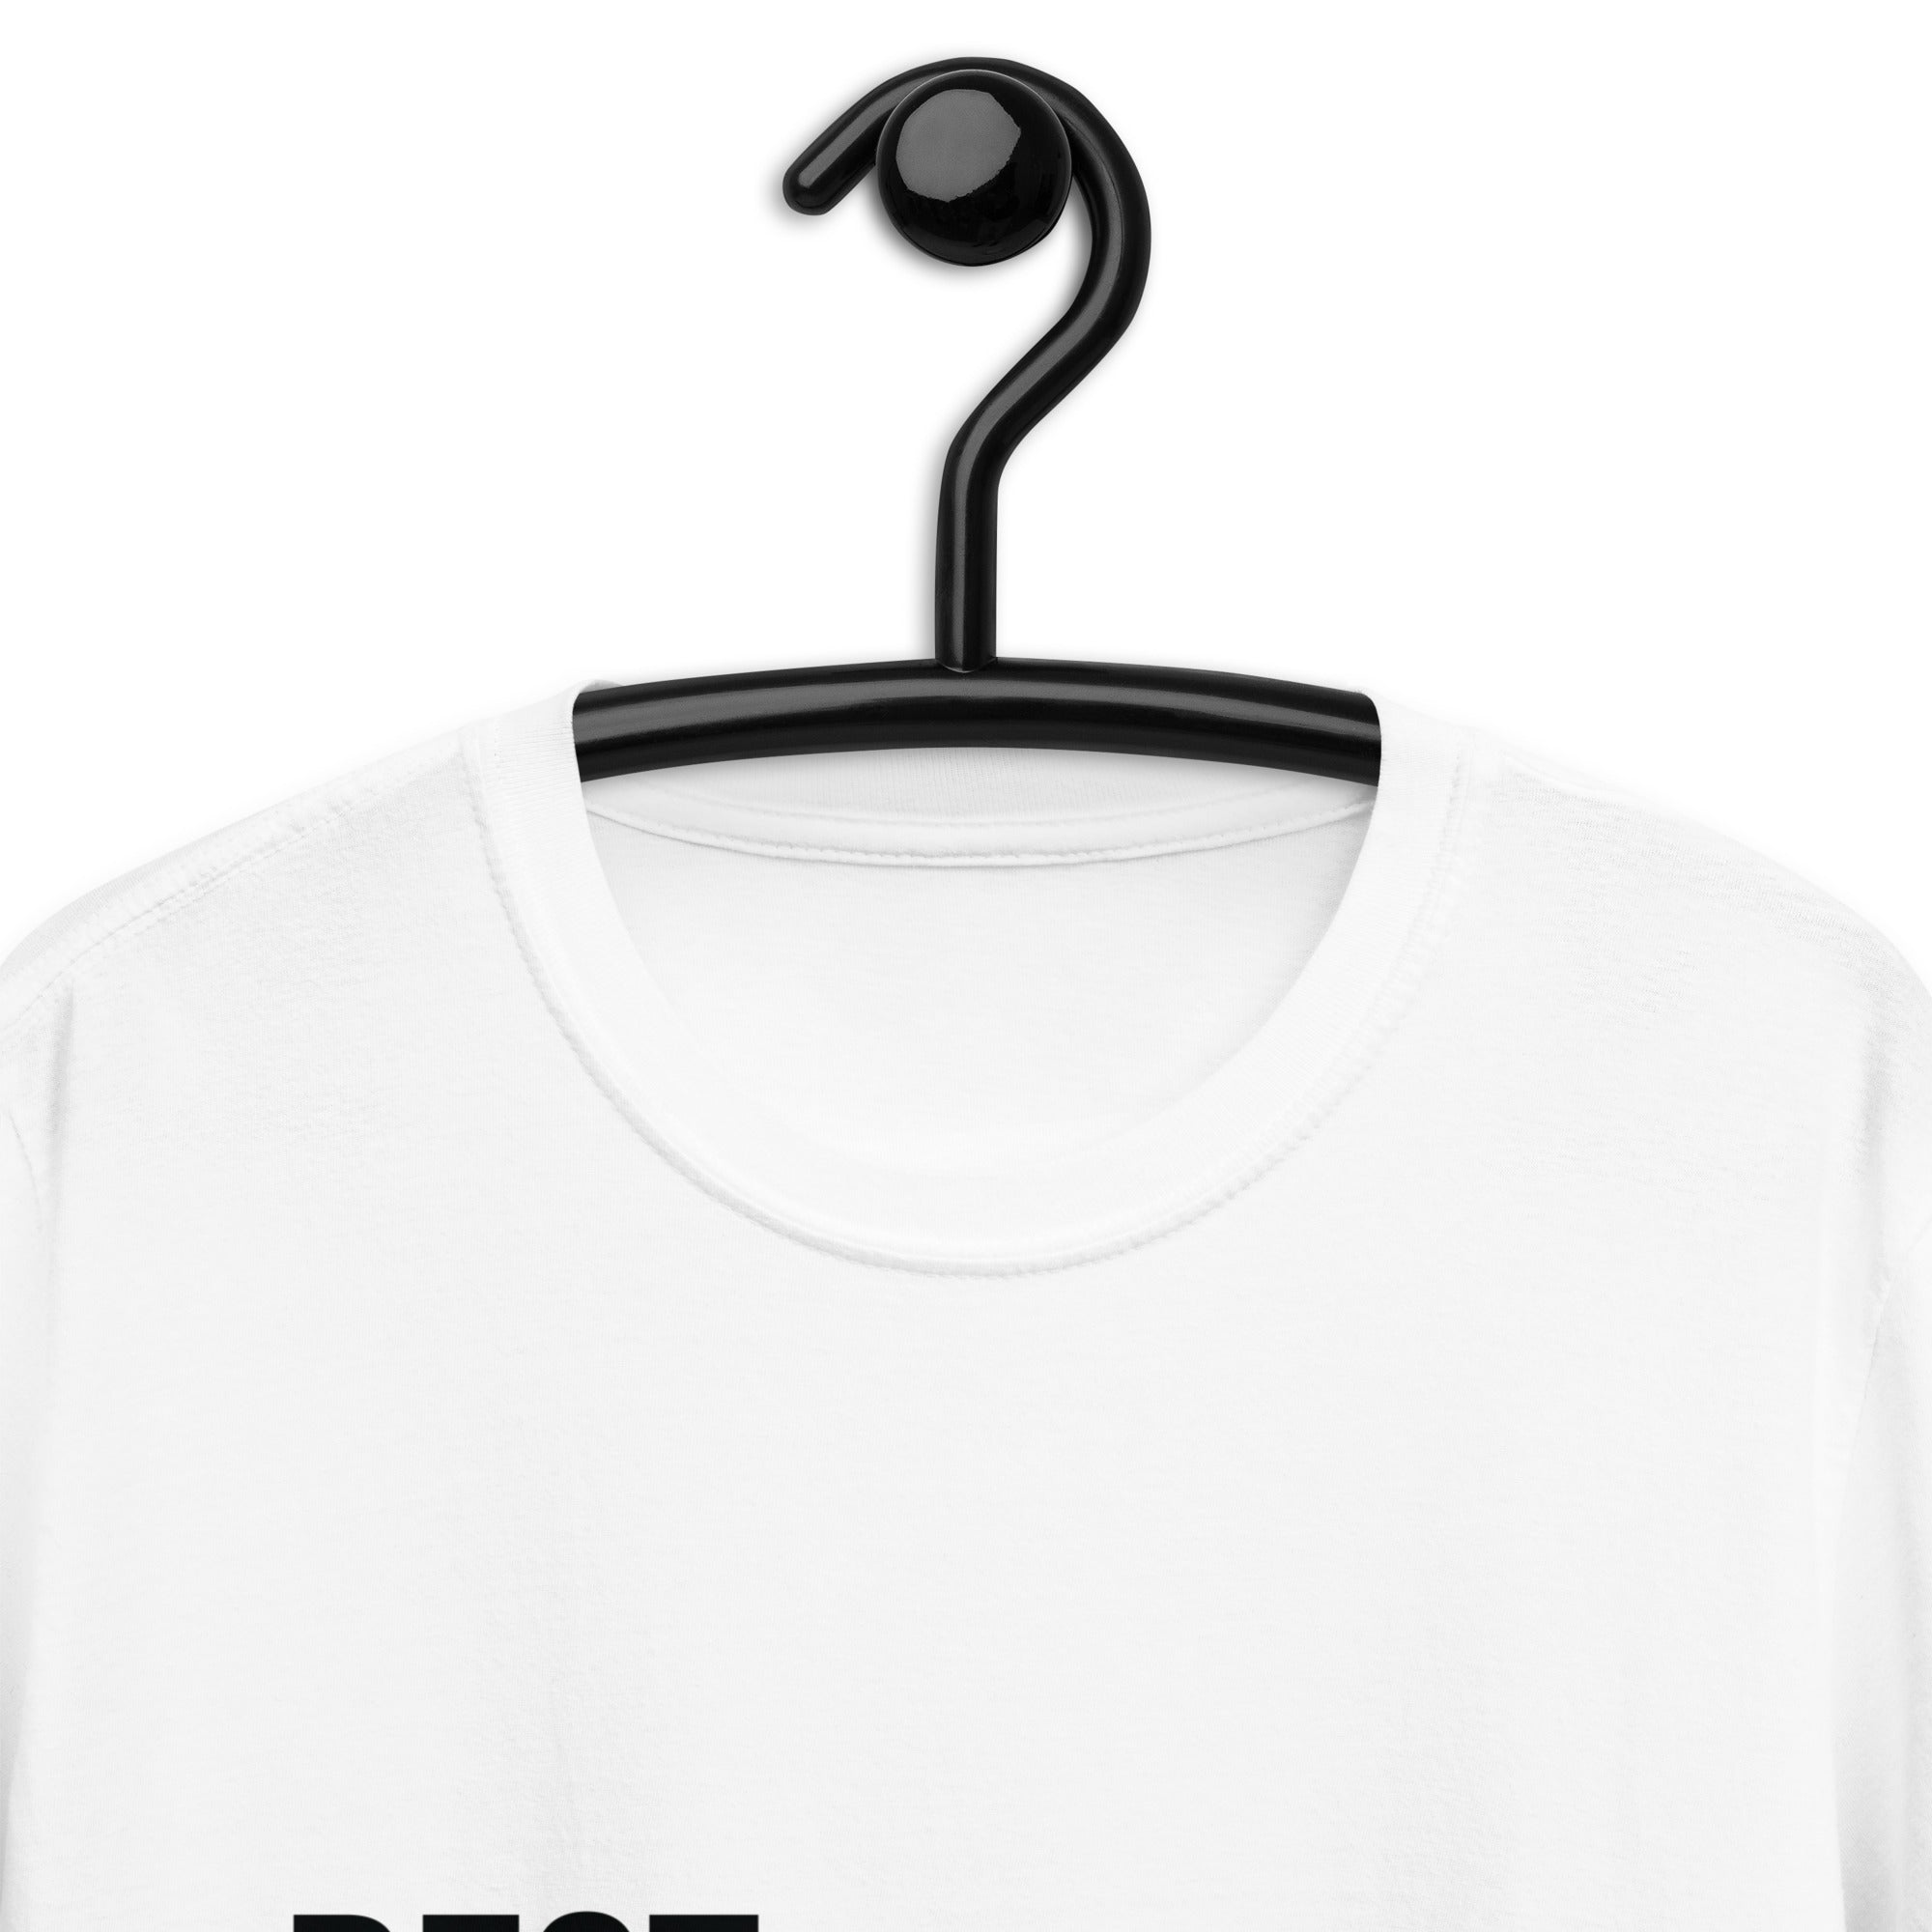 Short-Sleeve Unisex T-Shirt | Best. Receptionist. Ever.